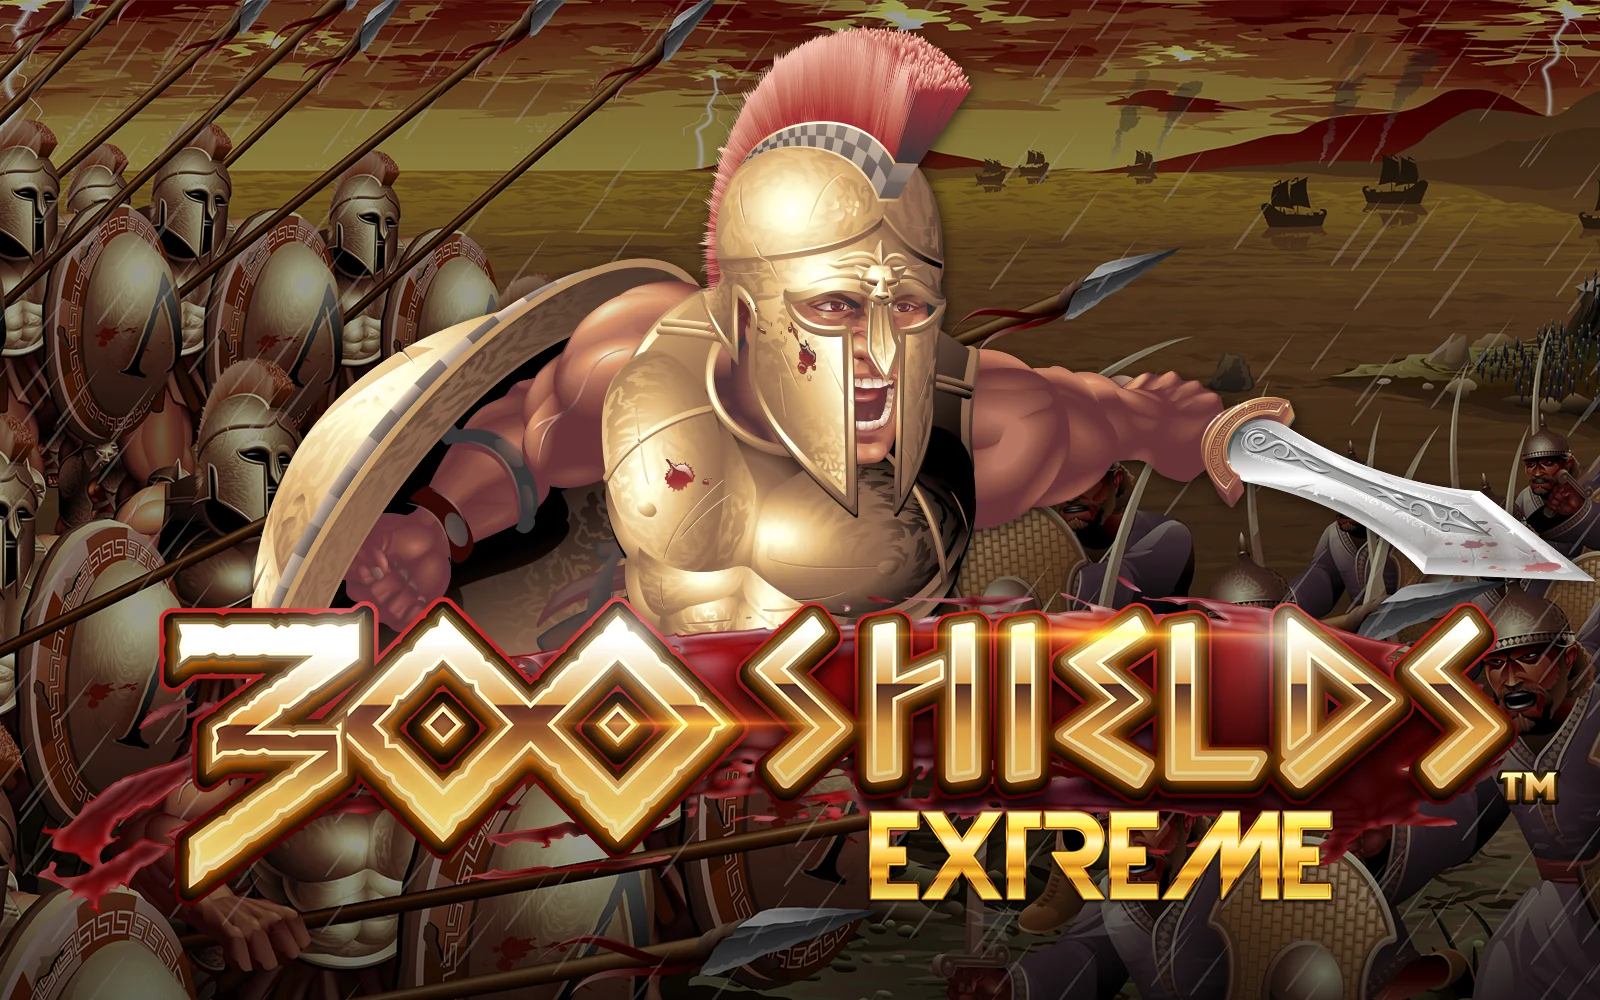 Play 300 Shields Extreme on Starcasino.be online casino